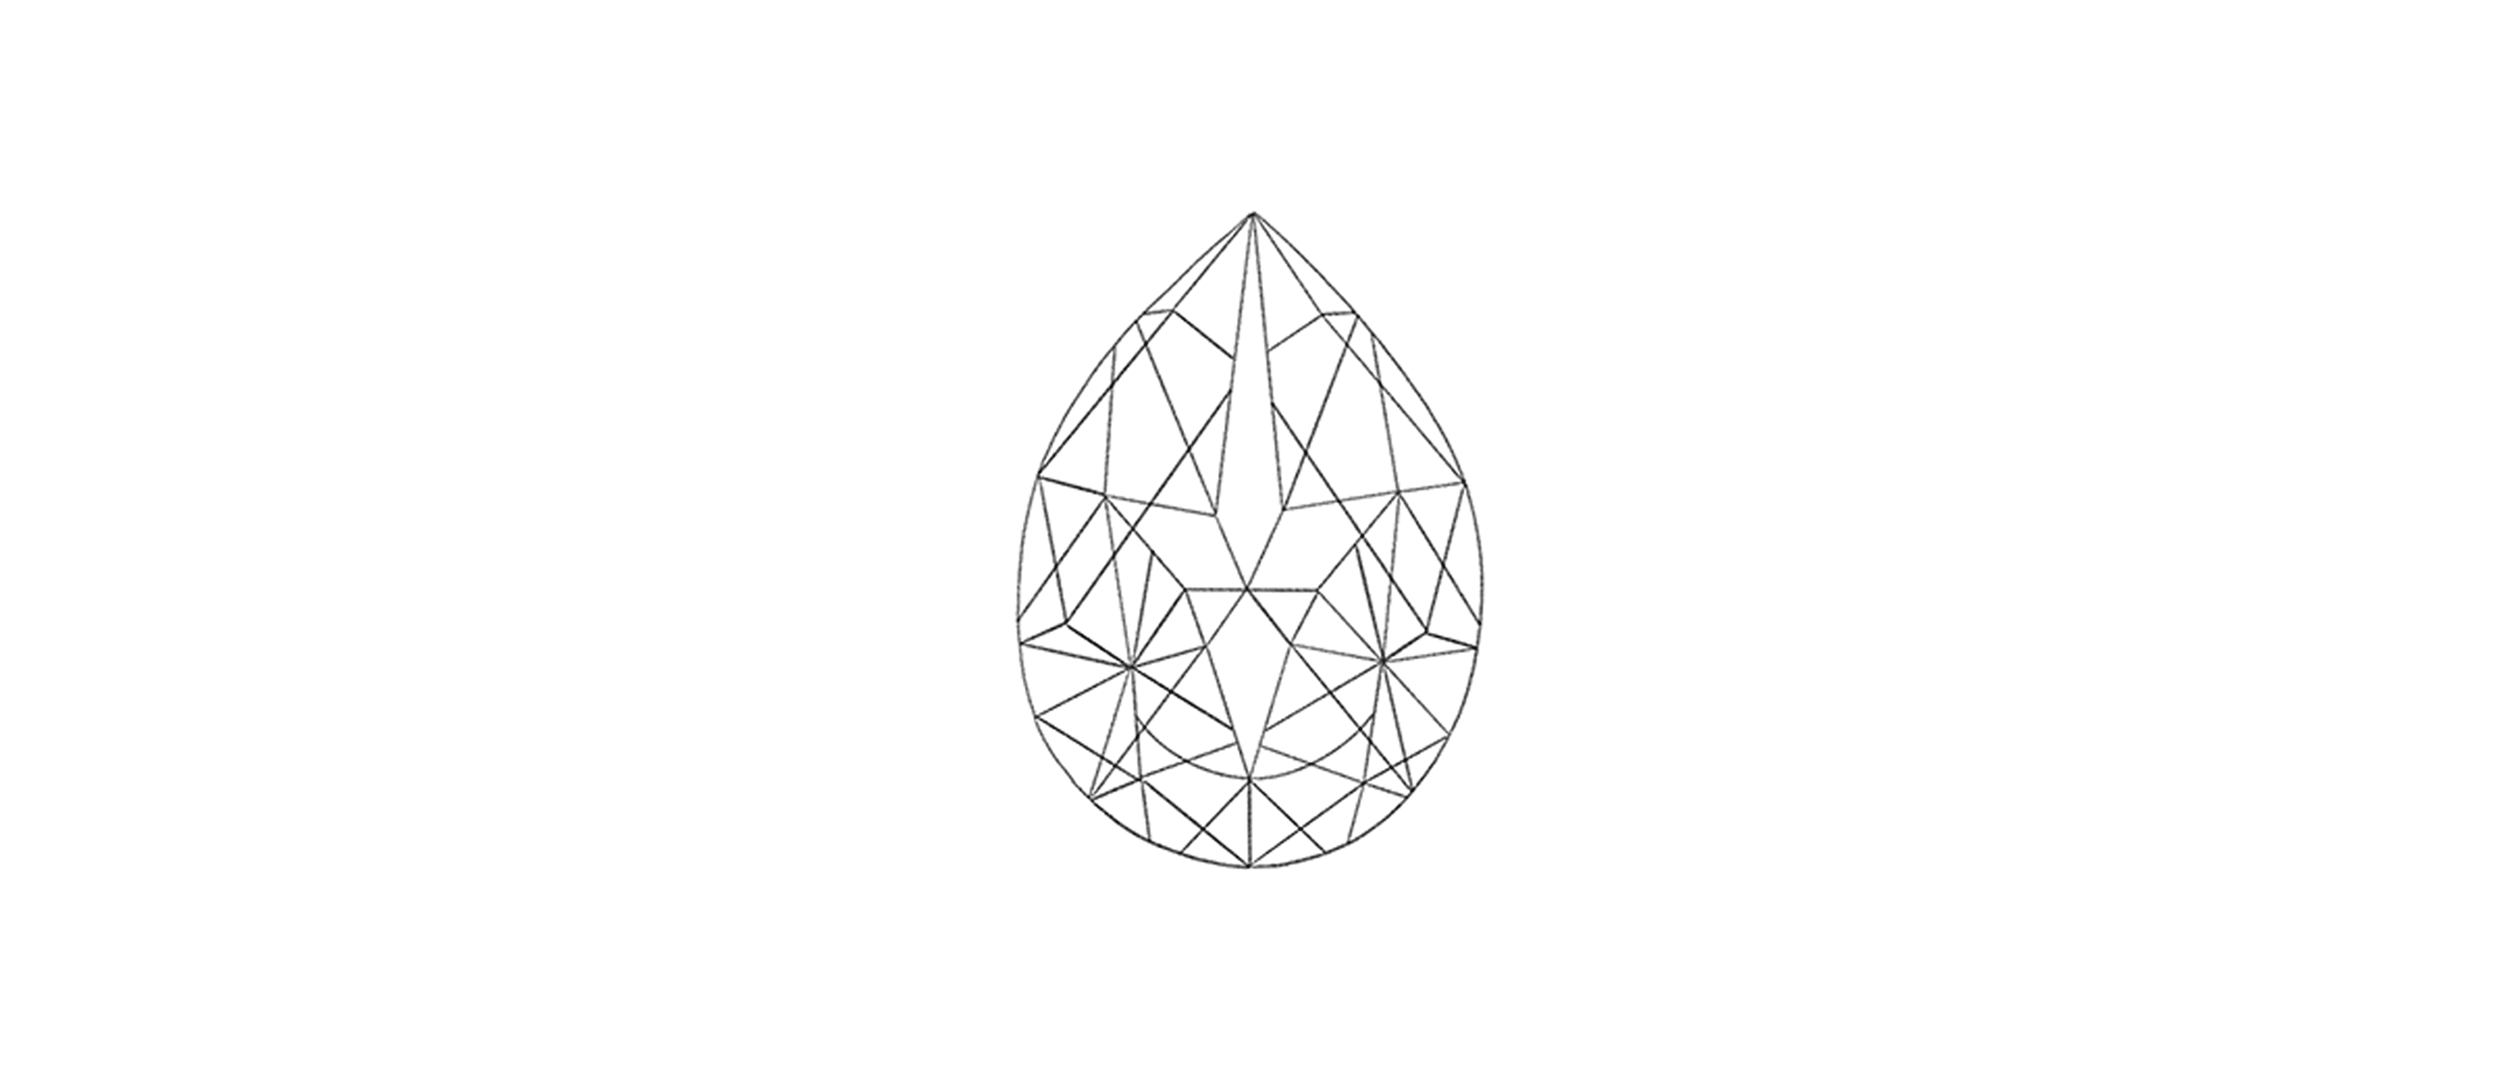 giulia-borsi-illustration-diamond-shapes